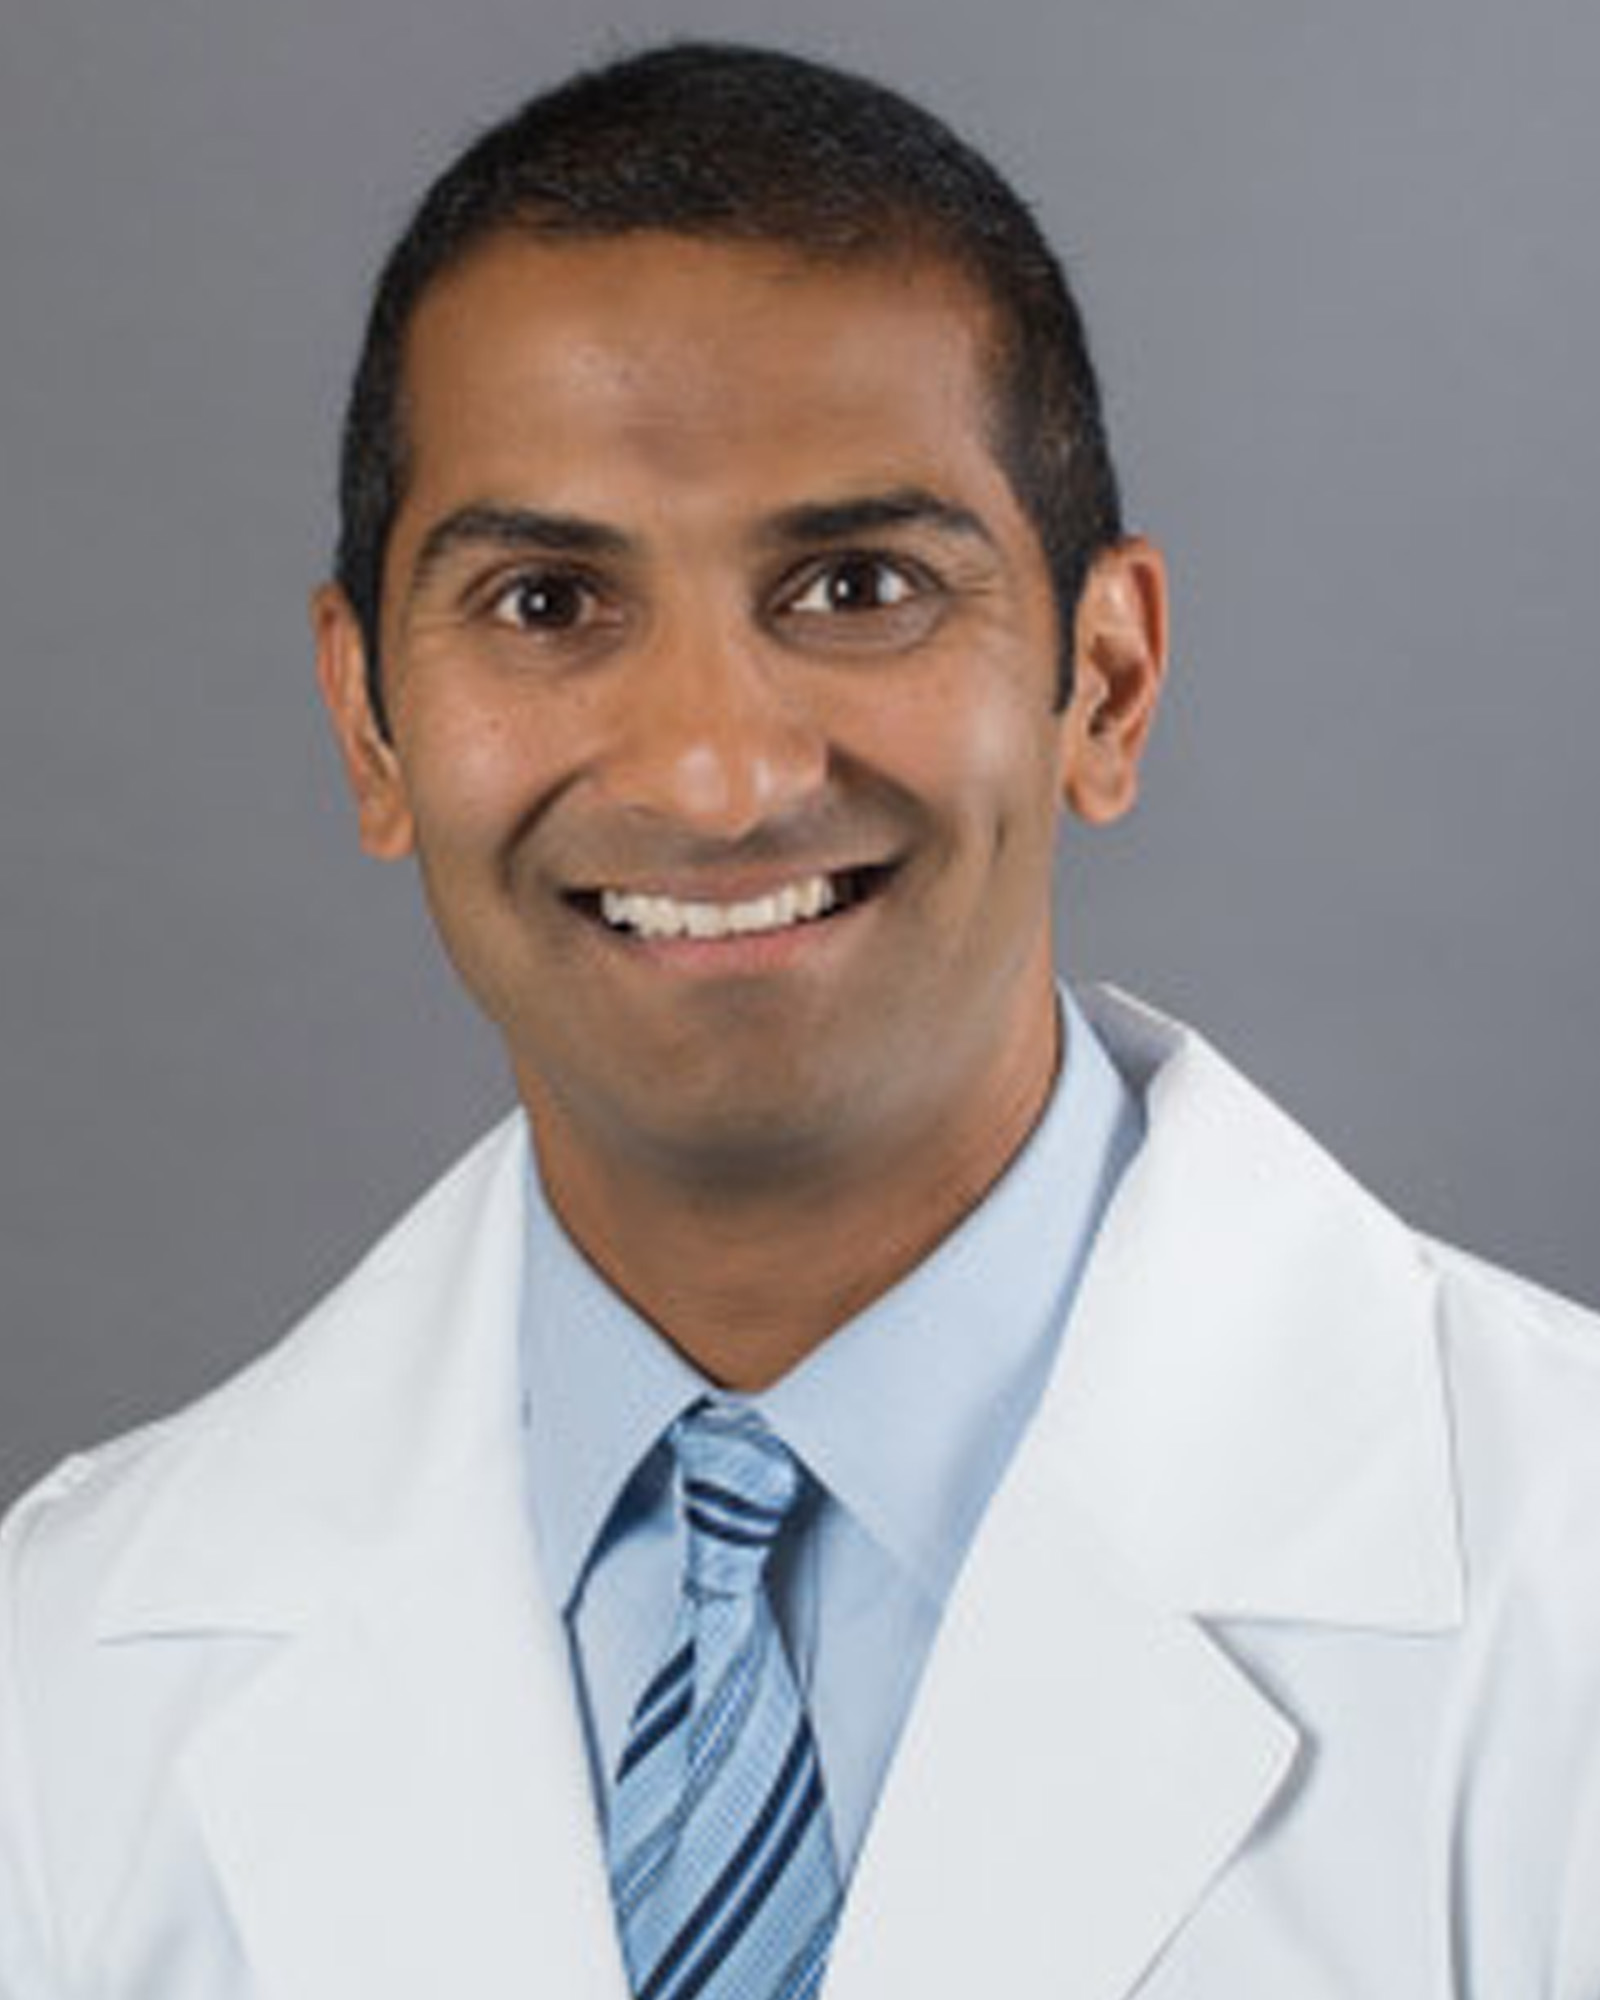 Samir Patel, MD